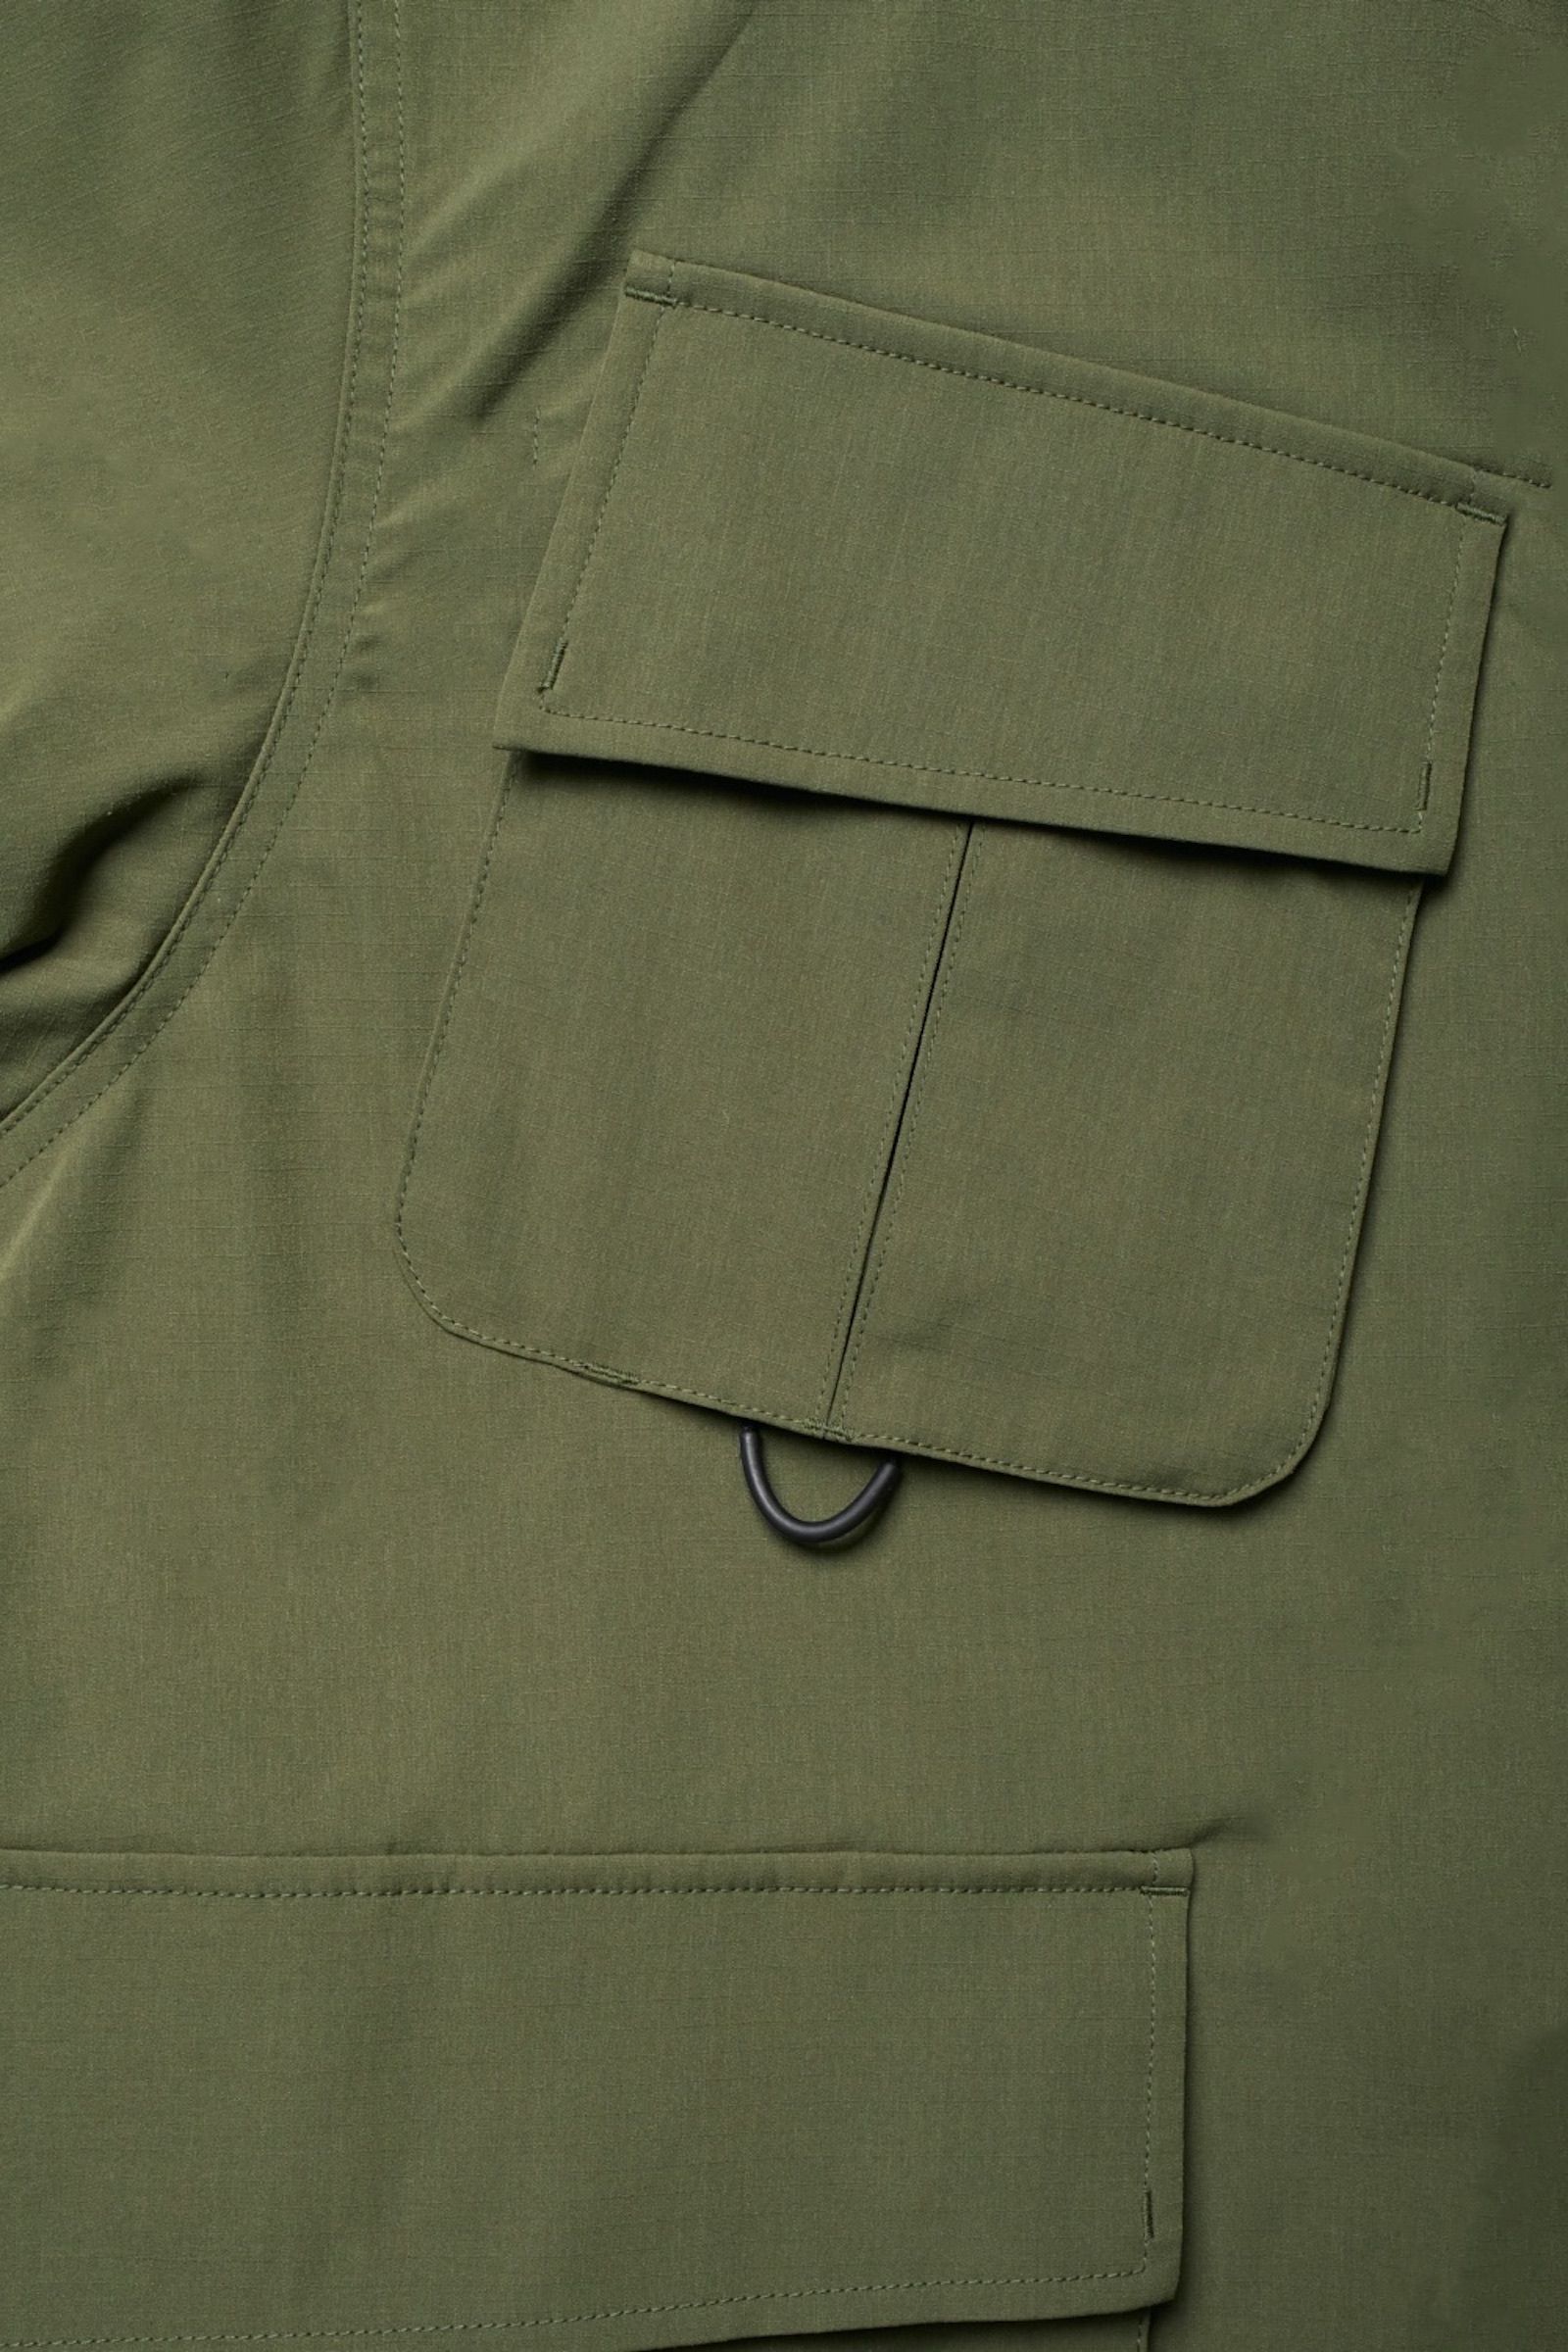 DAIWA PIER39 - tech jungle fatigue jacket 21aw | asterisk